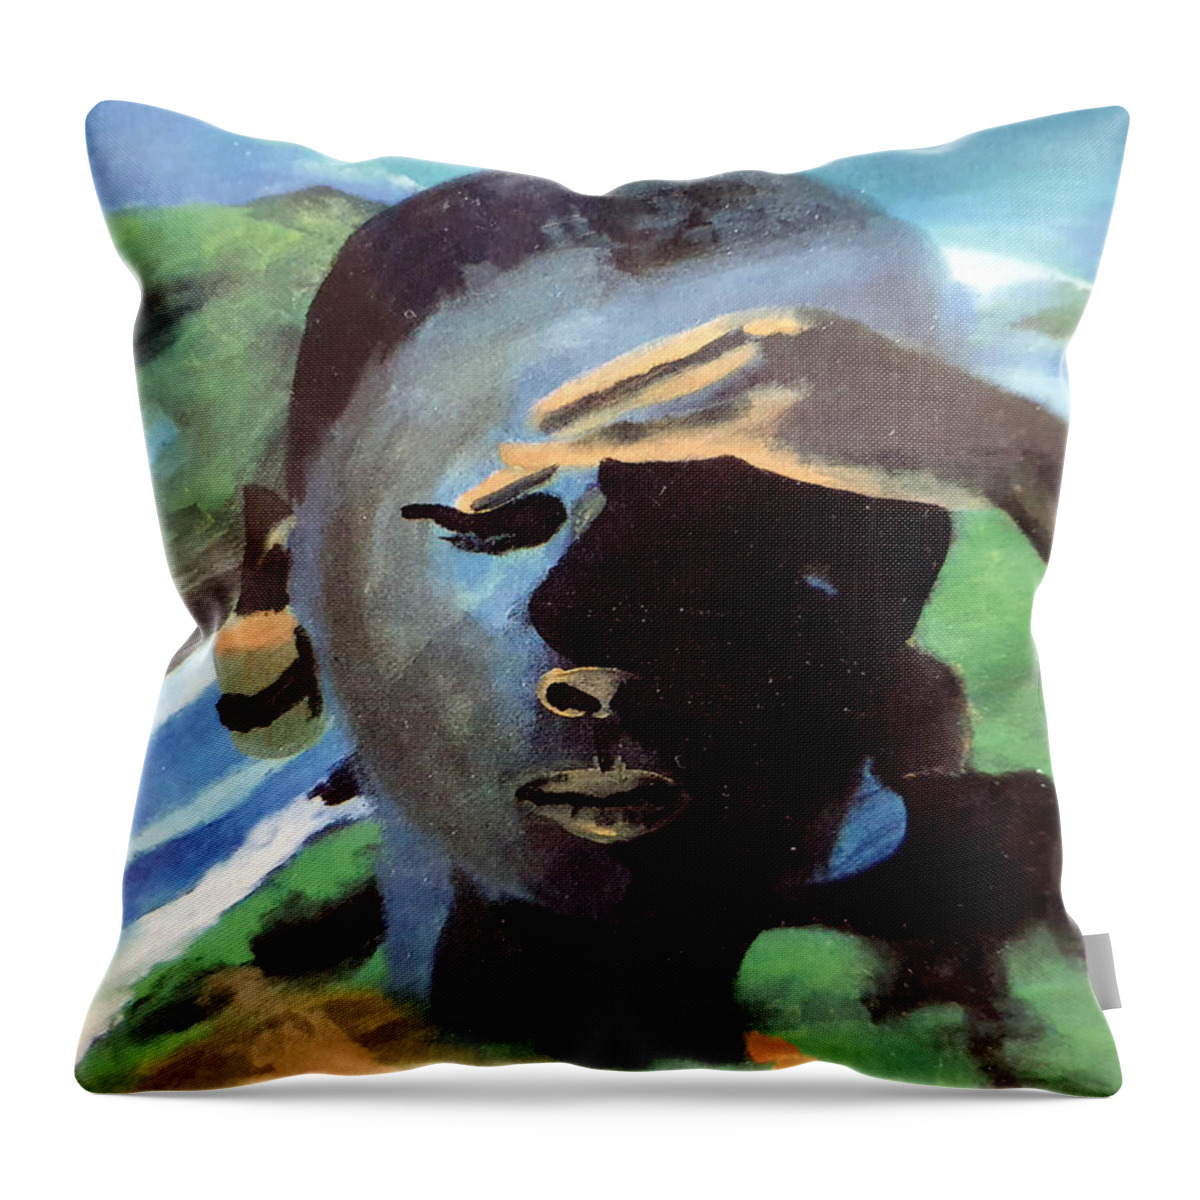 Masai Throw Pillow featuring the painting Masai by Enrico Garff